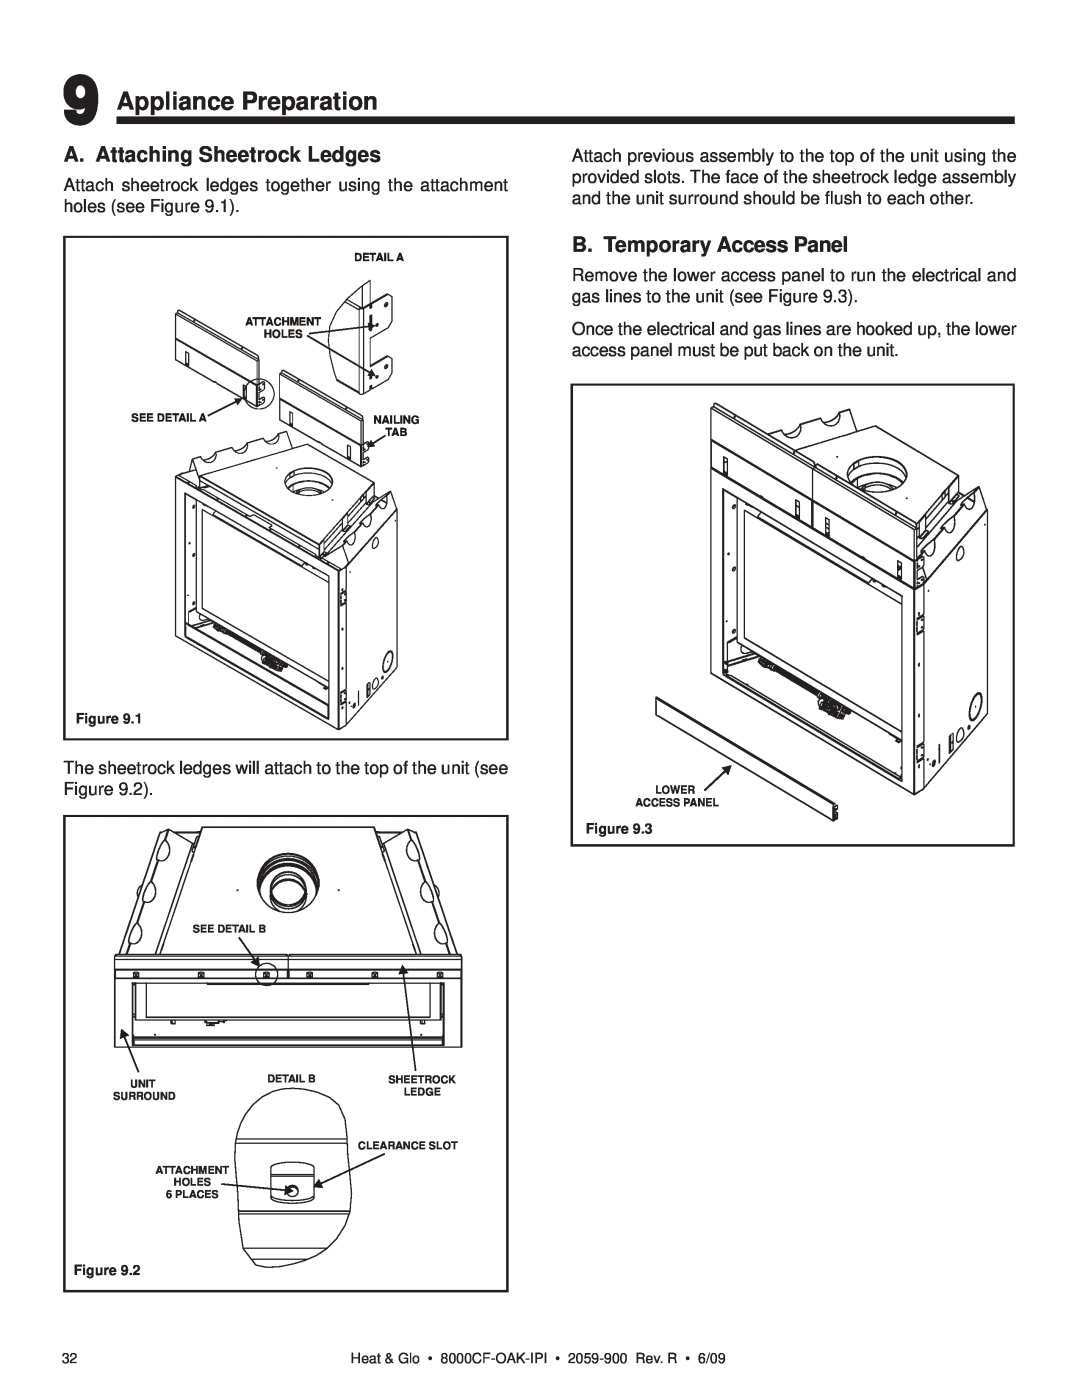 Heat & Glo LifeStyle 8000CFLP-OAKIPI Appliance Preparation, A. Attaching Sheetrock Ledges, B. Temporary Access Panel 